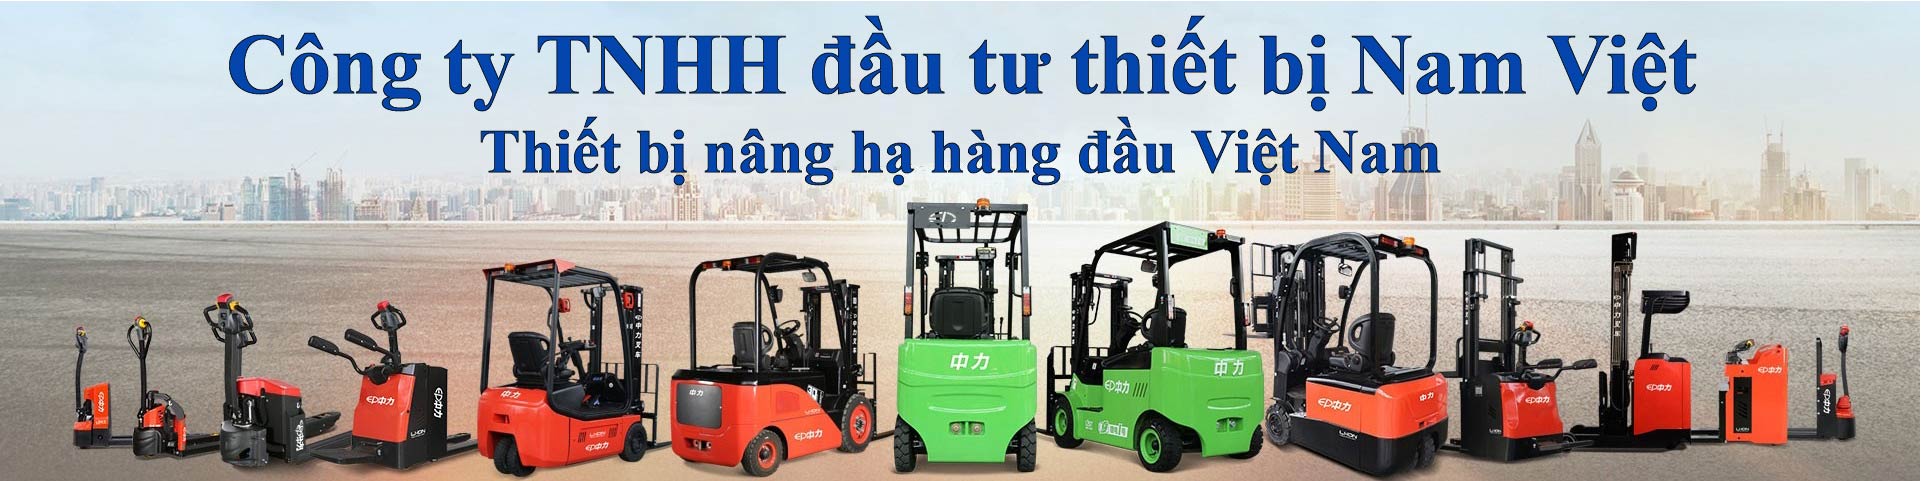 banner xe nang nam viet